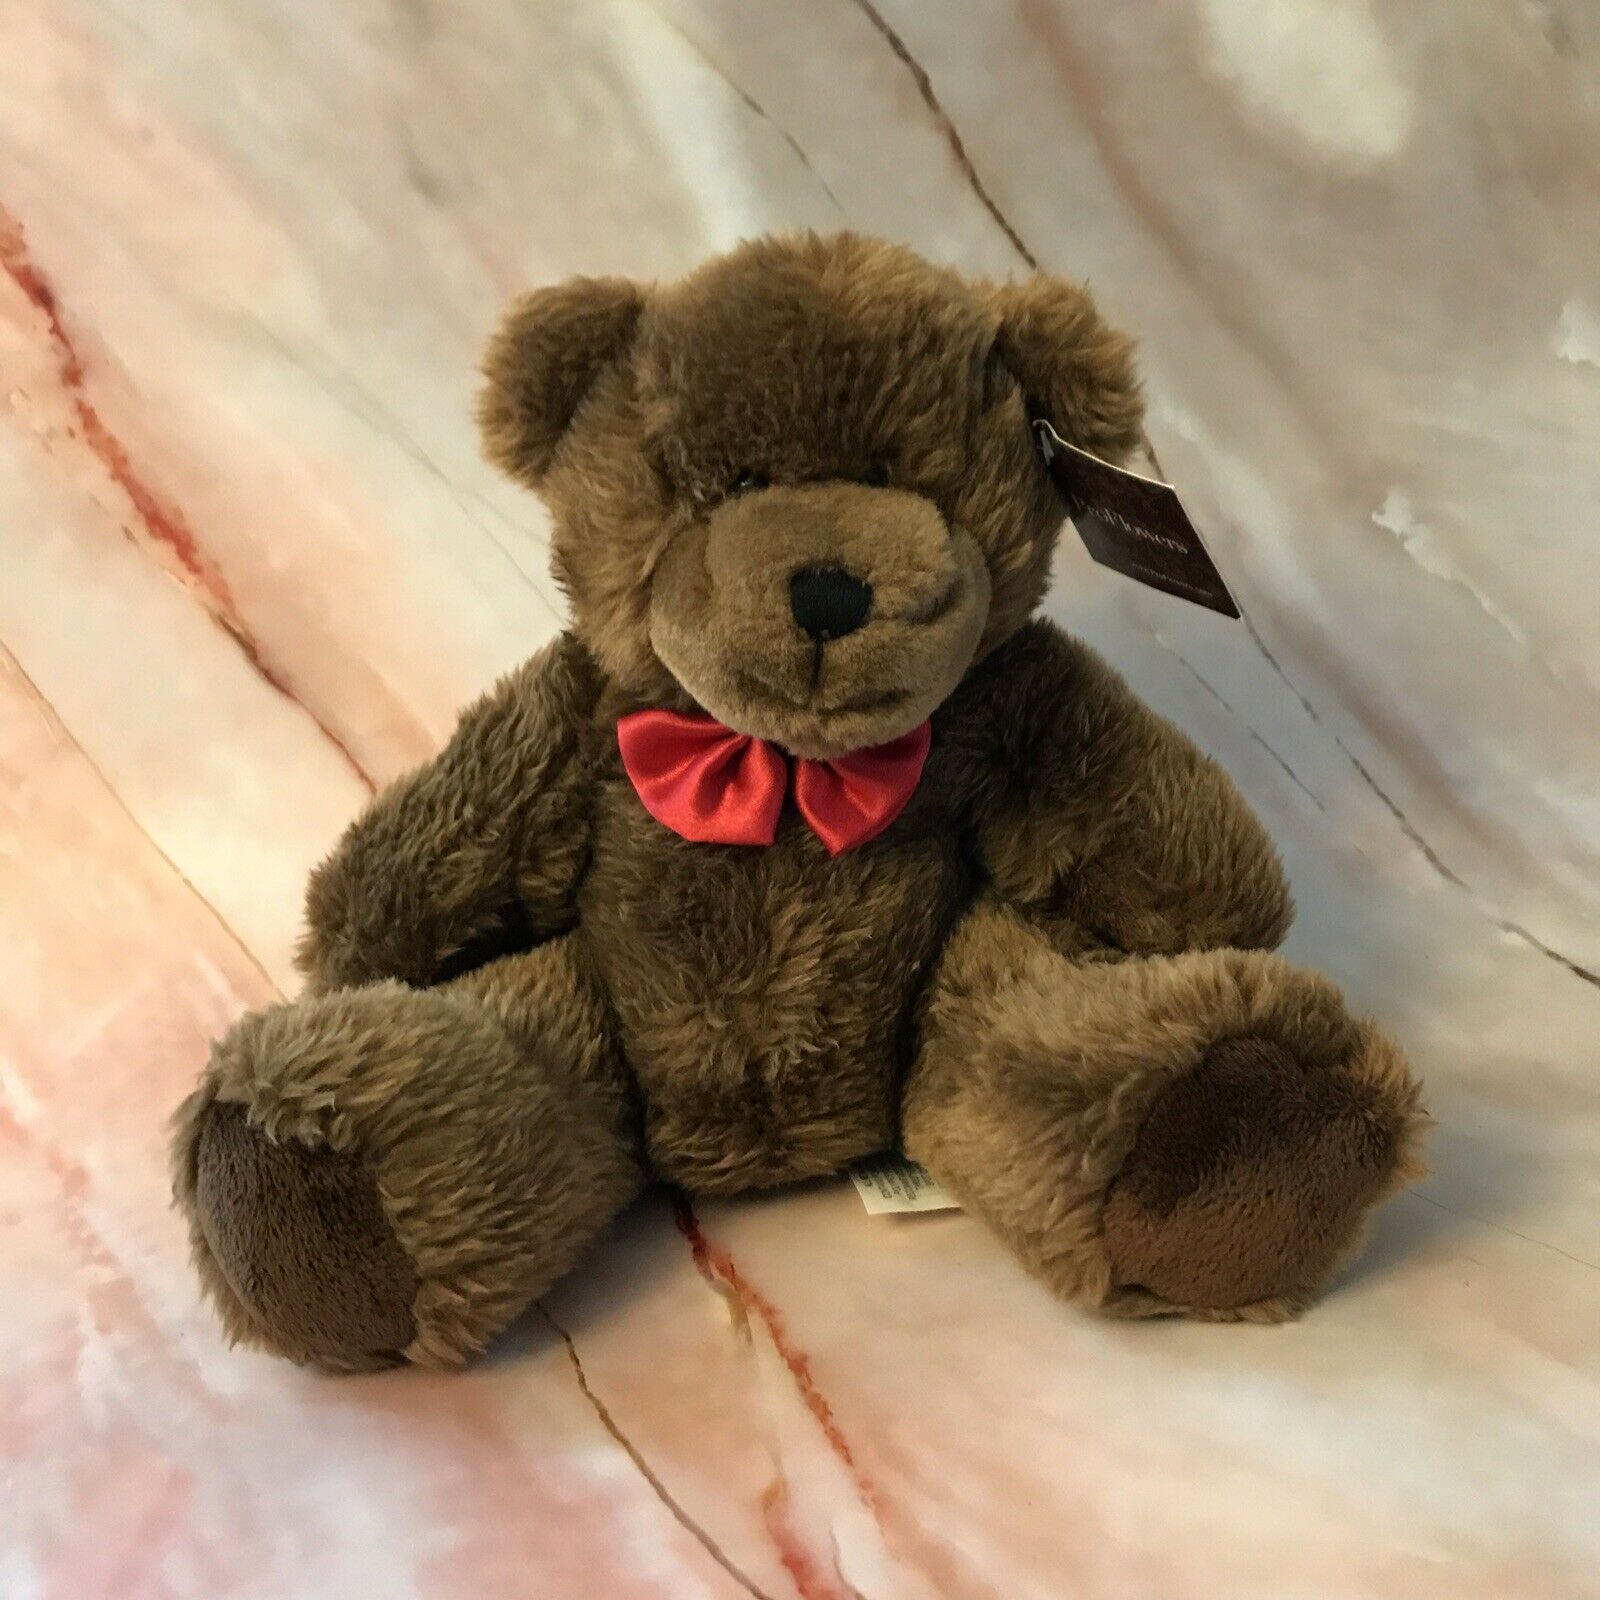 Proflowers Brown Teddy Bear With Red Satin Bowtie 8” Plush Stuffed Animal Tt